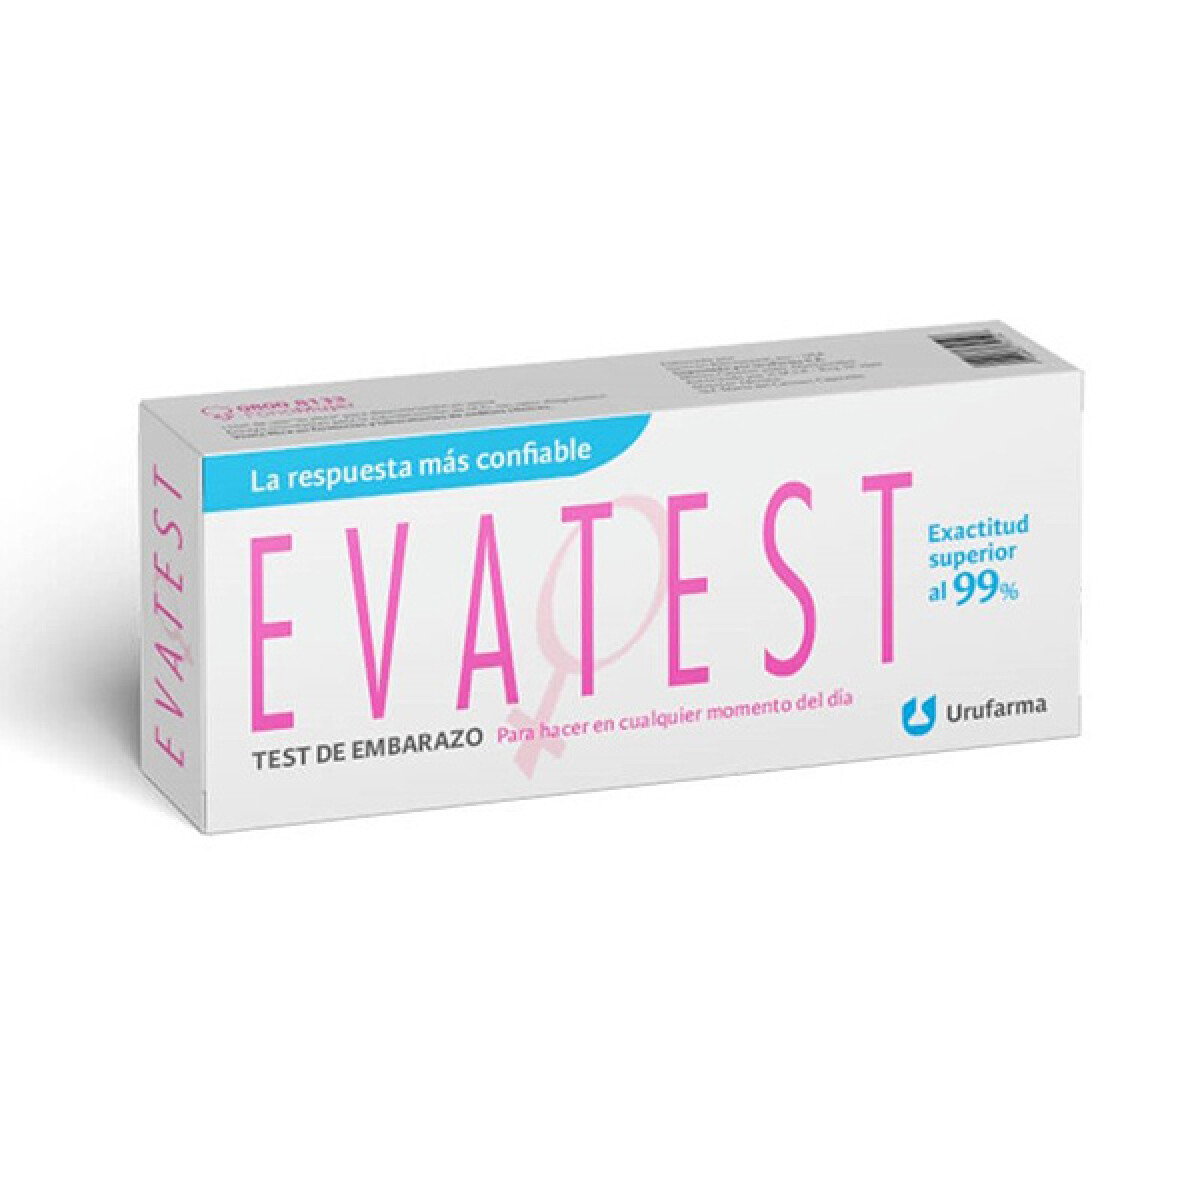 Evatest test de embarazo - Tradicional 